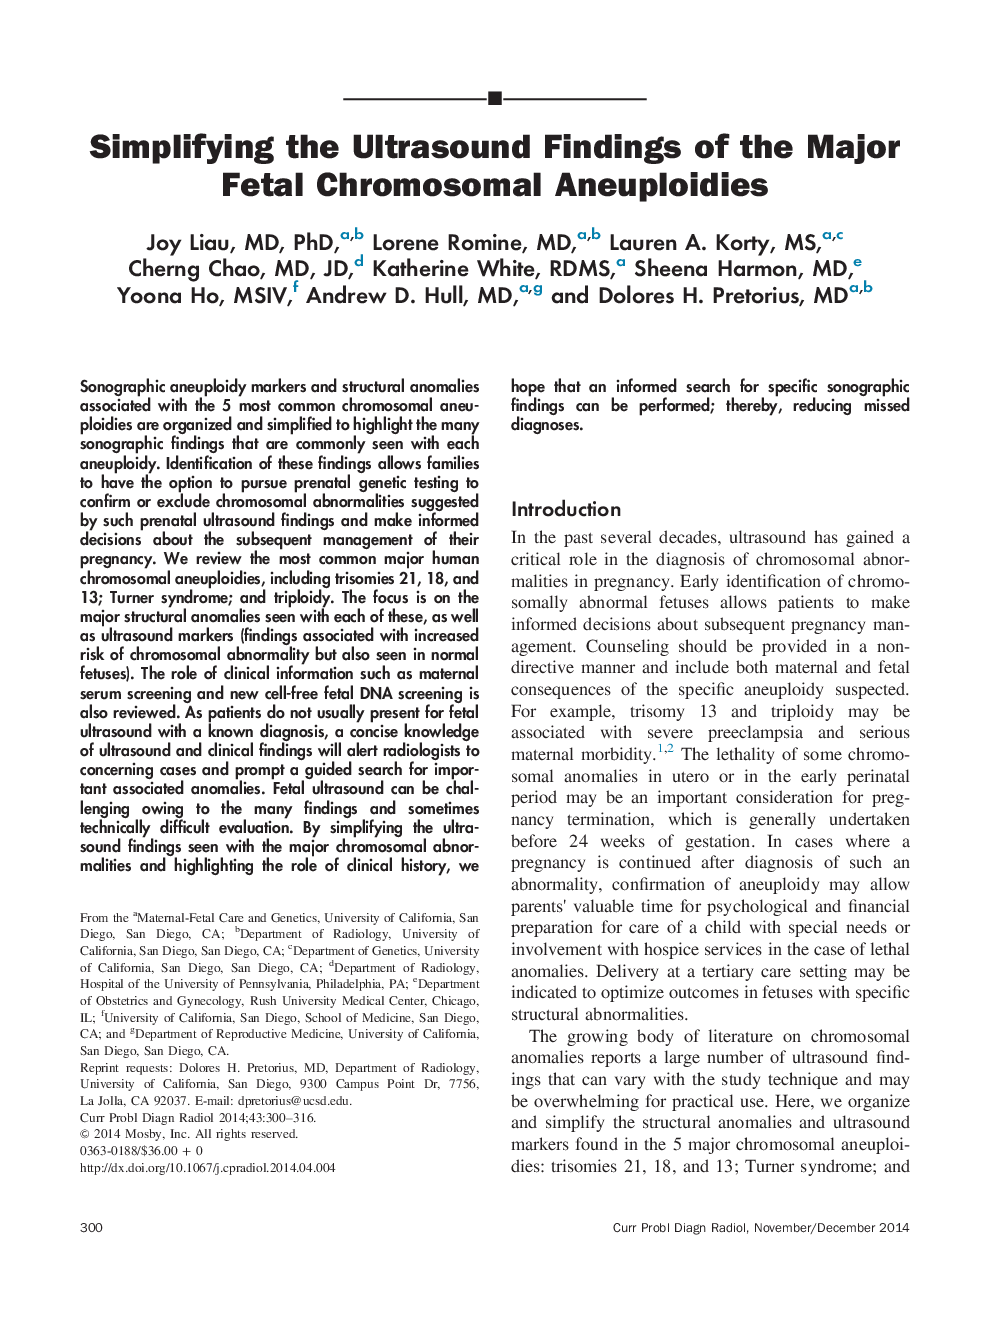 Simplifying the Ultrasound Findings of the Major Fetal Chromosomal Aneuploidies